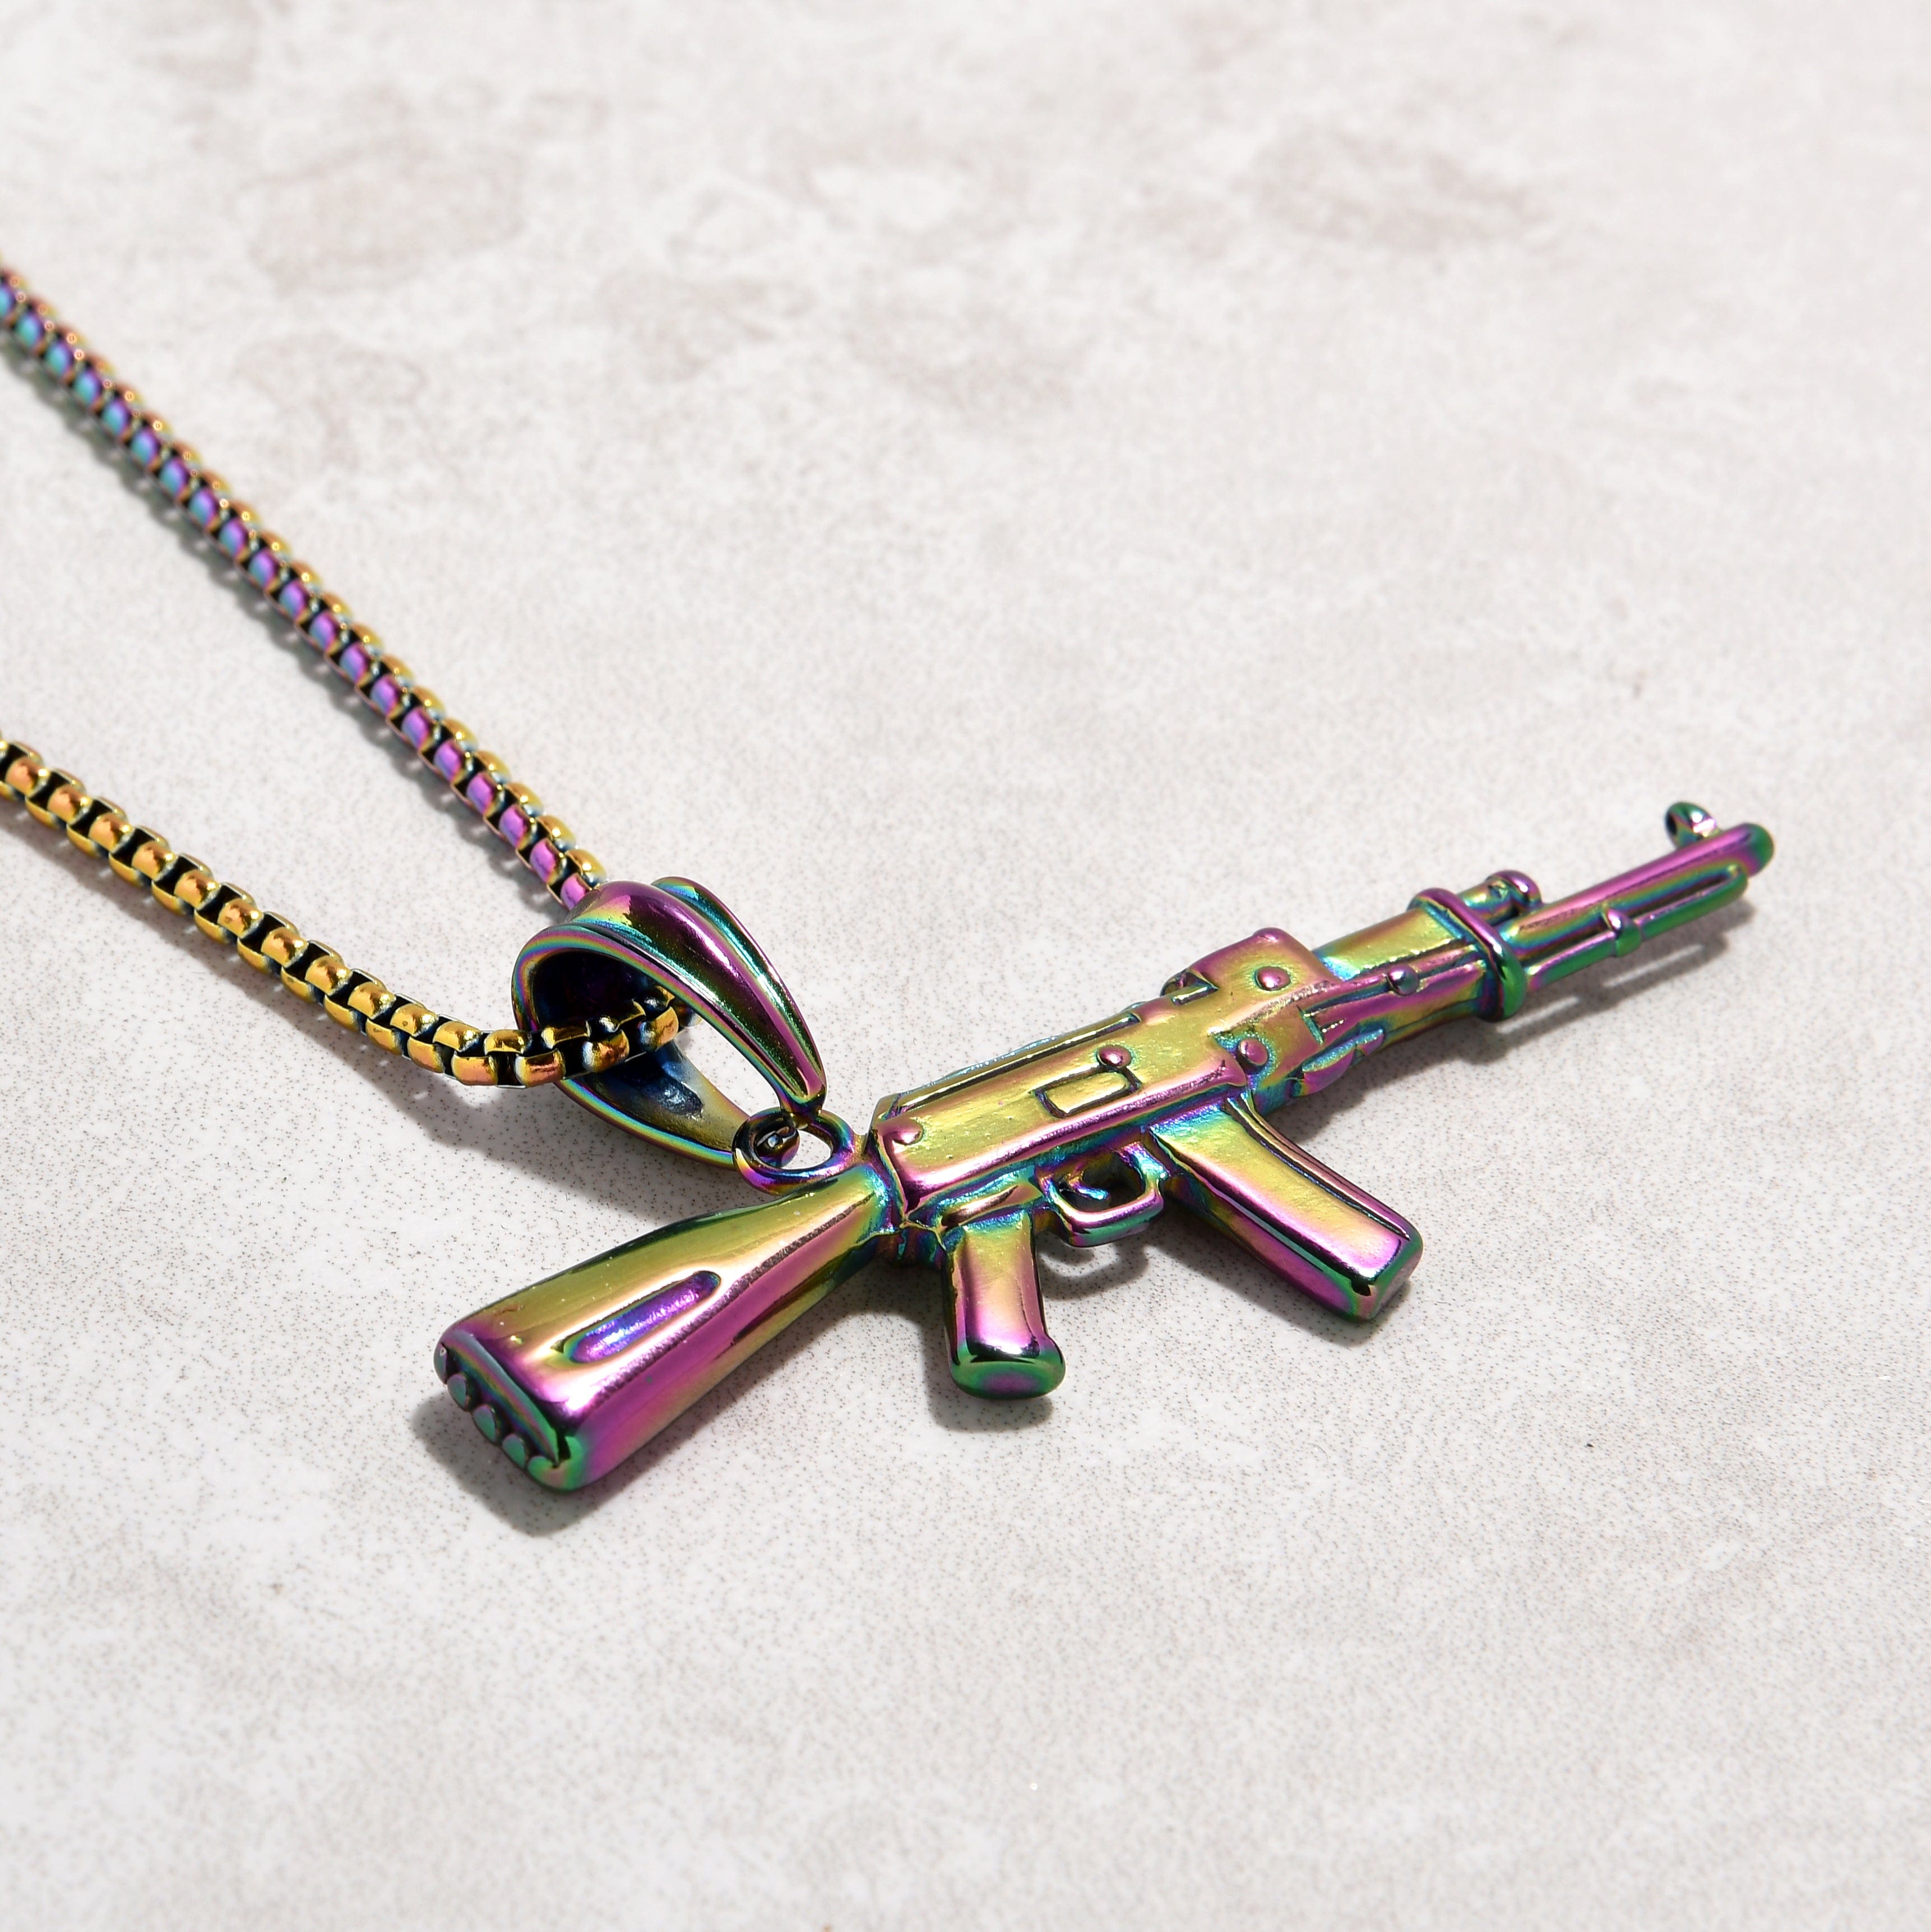 Kalifano Steel Hearts Jewelry Aurora Borealis AK-47 Gun Steel Hearts Necklace SHN518-AB